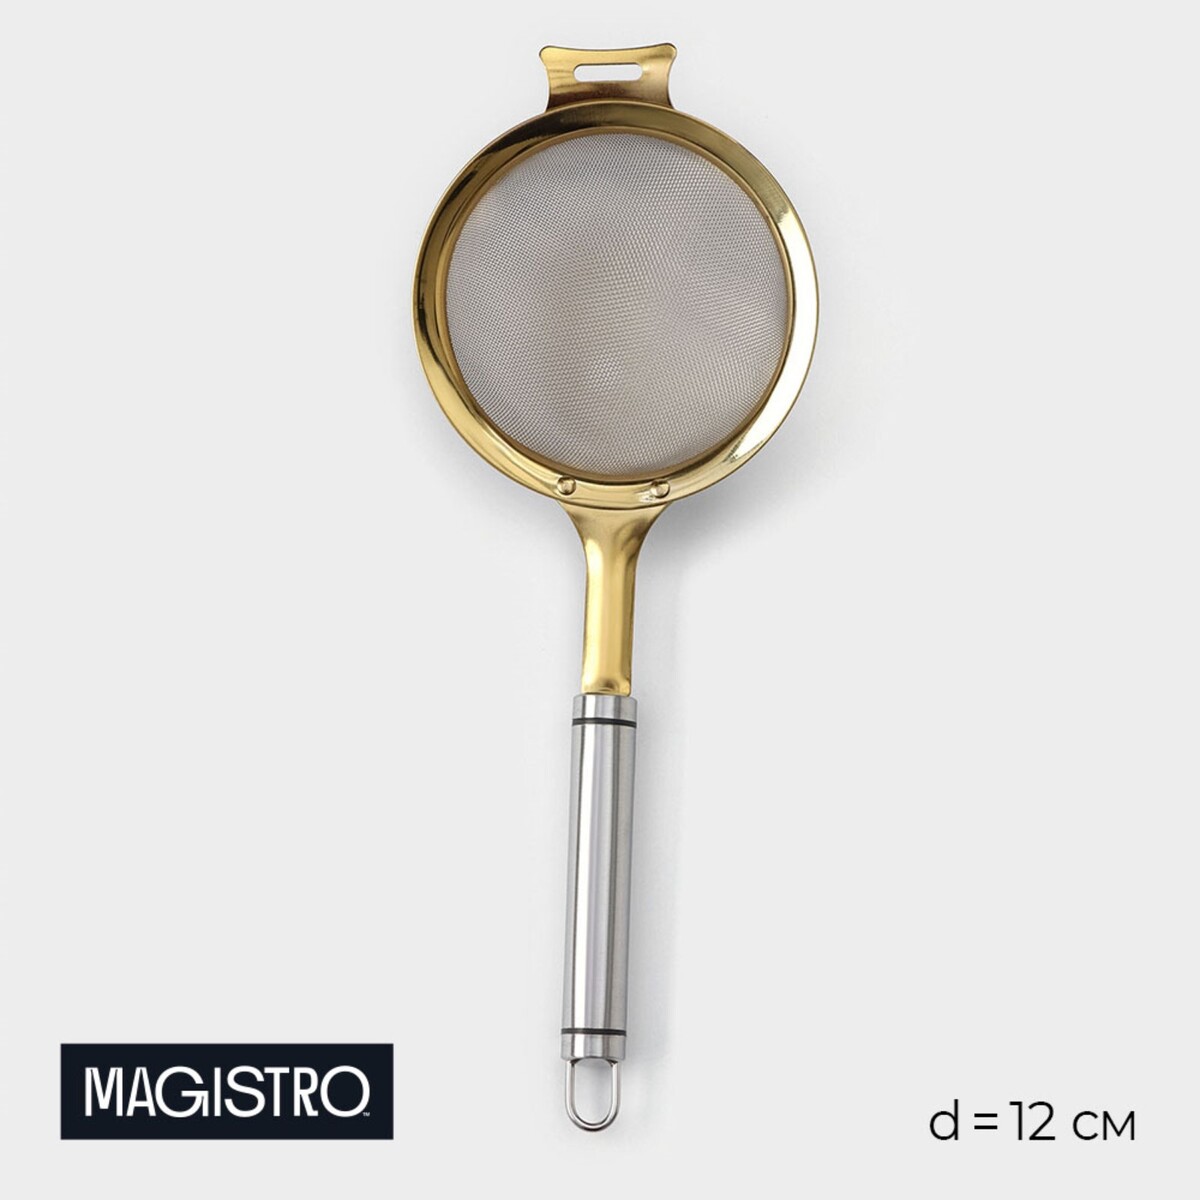 Сито magistro arti gold, d=12 см сито дуршлаг magistro arti d 12 см с фиксатором